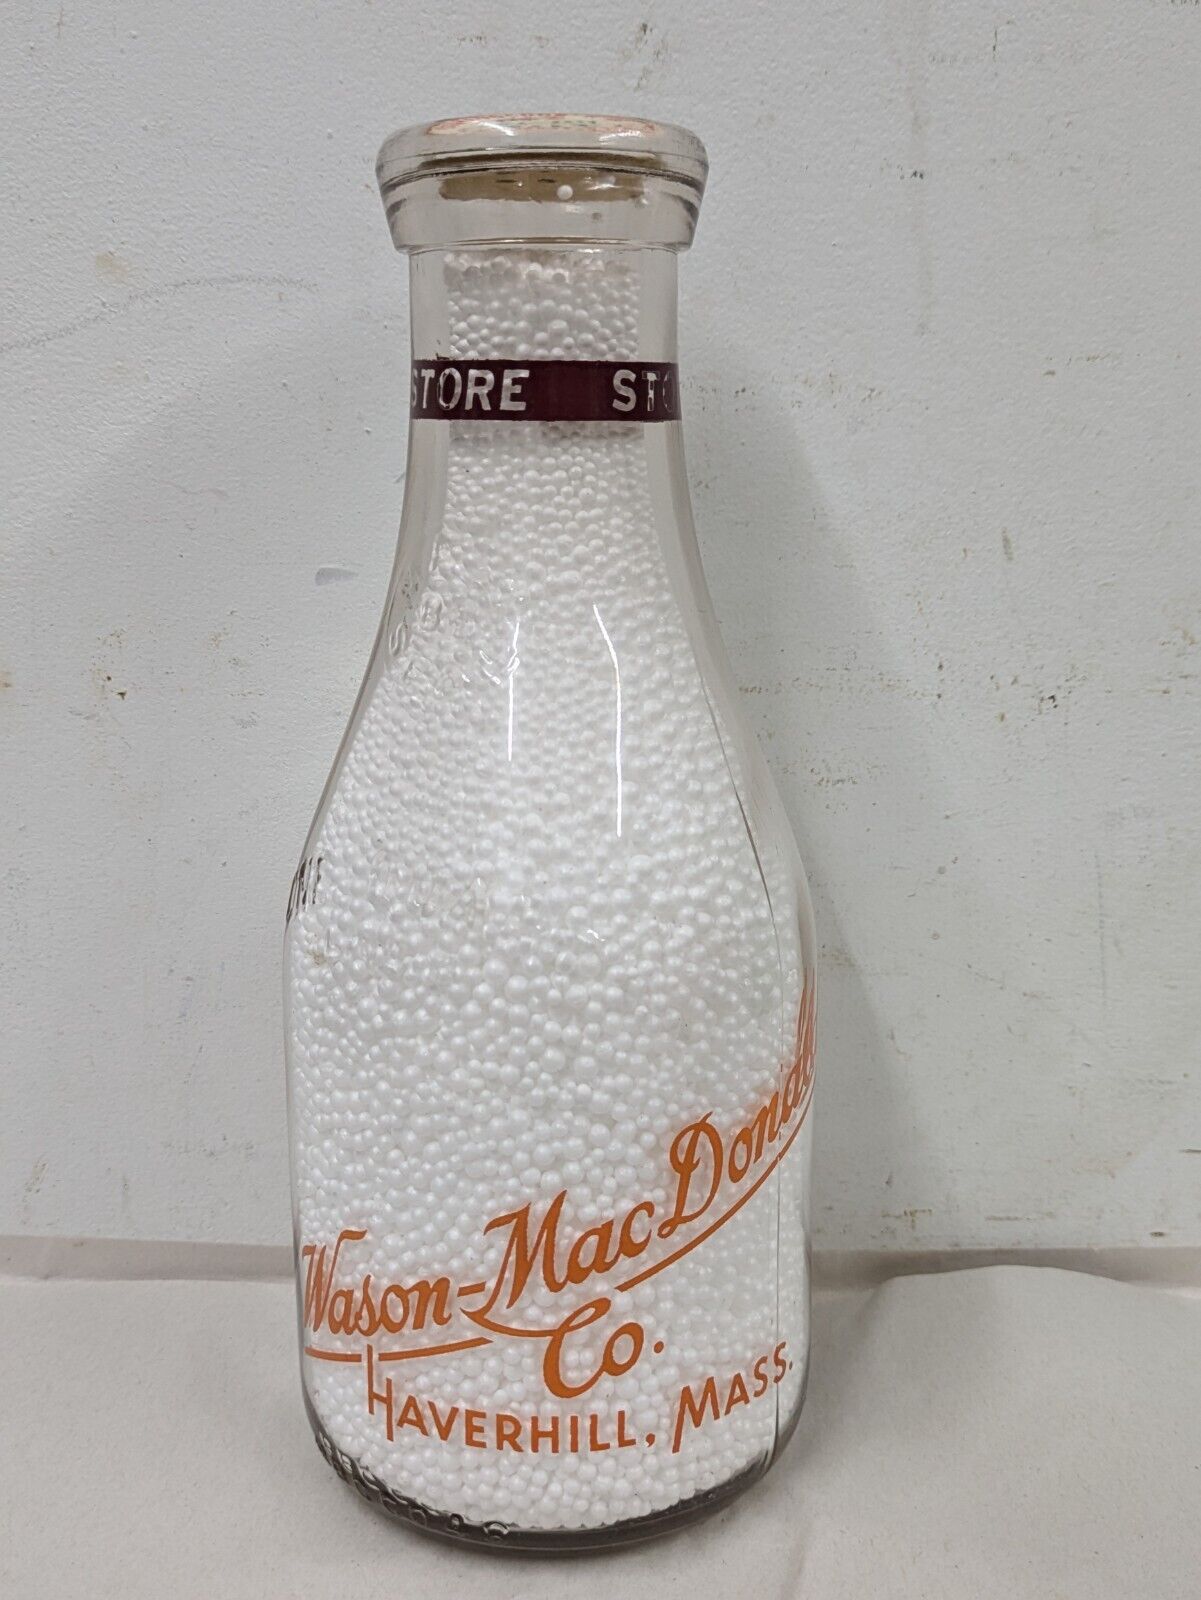 Vintage Wason McDonald TRPQ Quart Store Milk Bottle Haverhill MA Mass